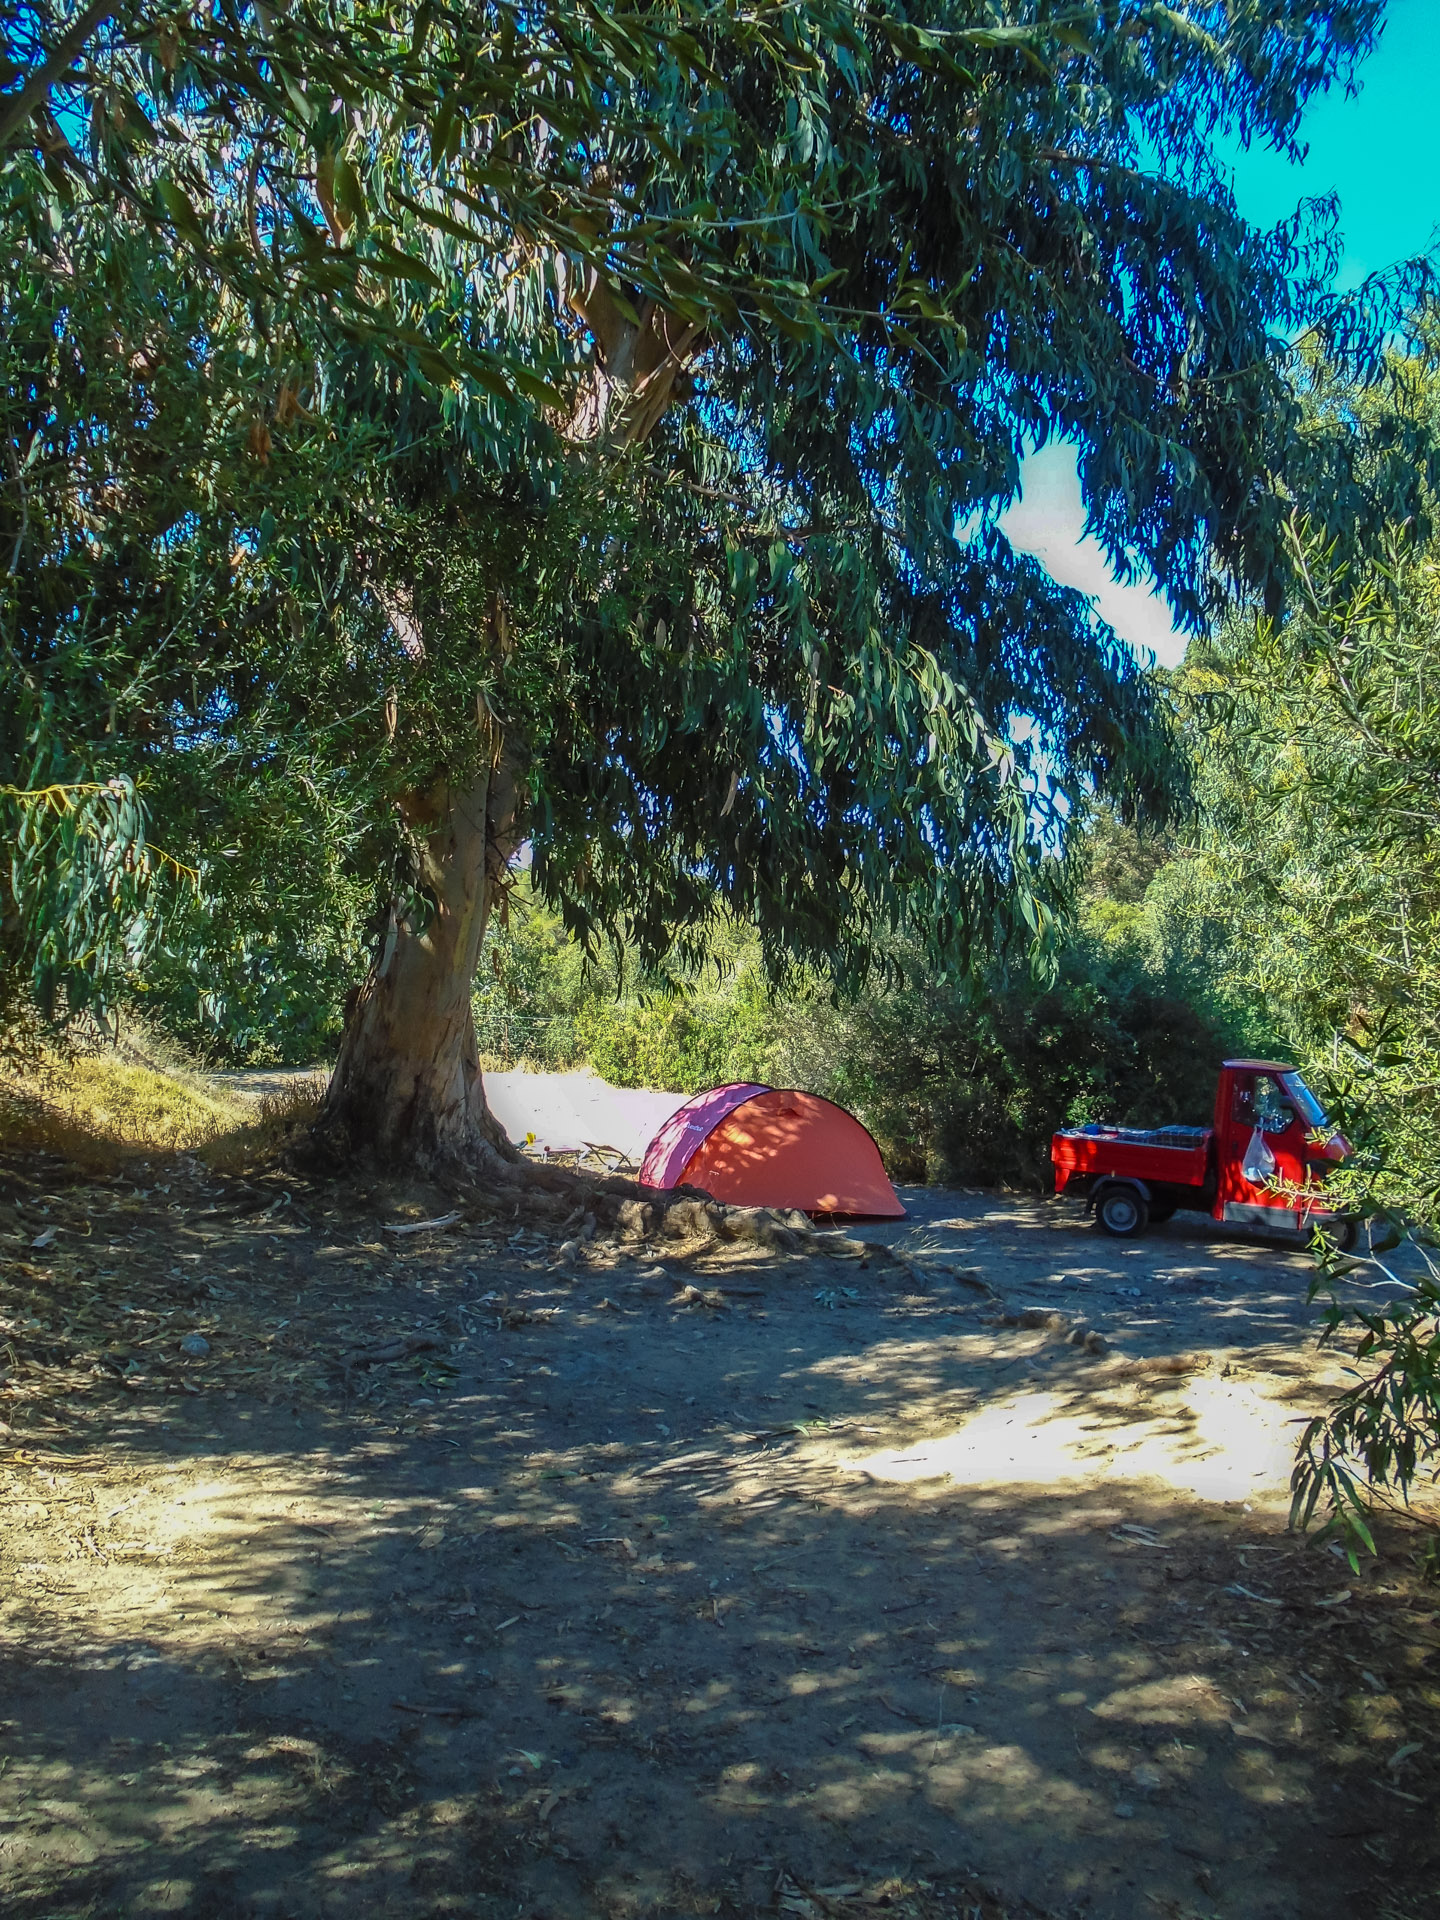 Camping L'Ostriconi